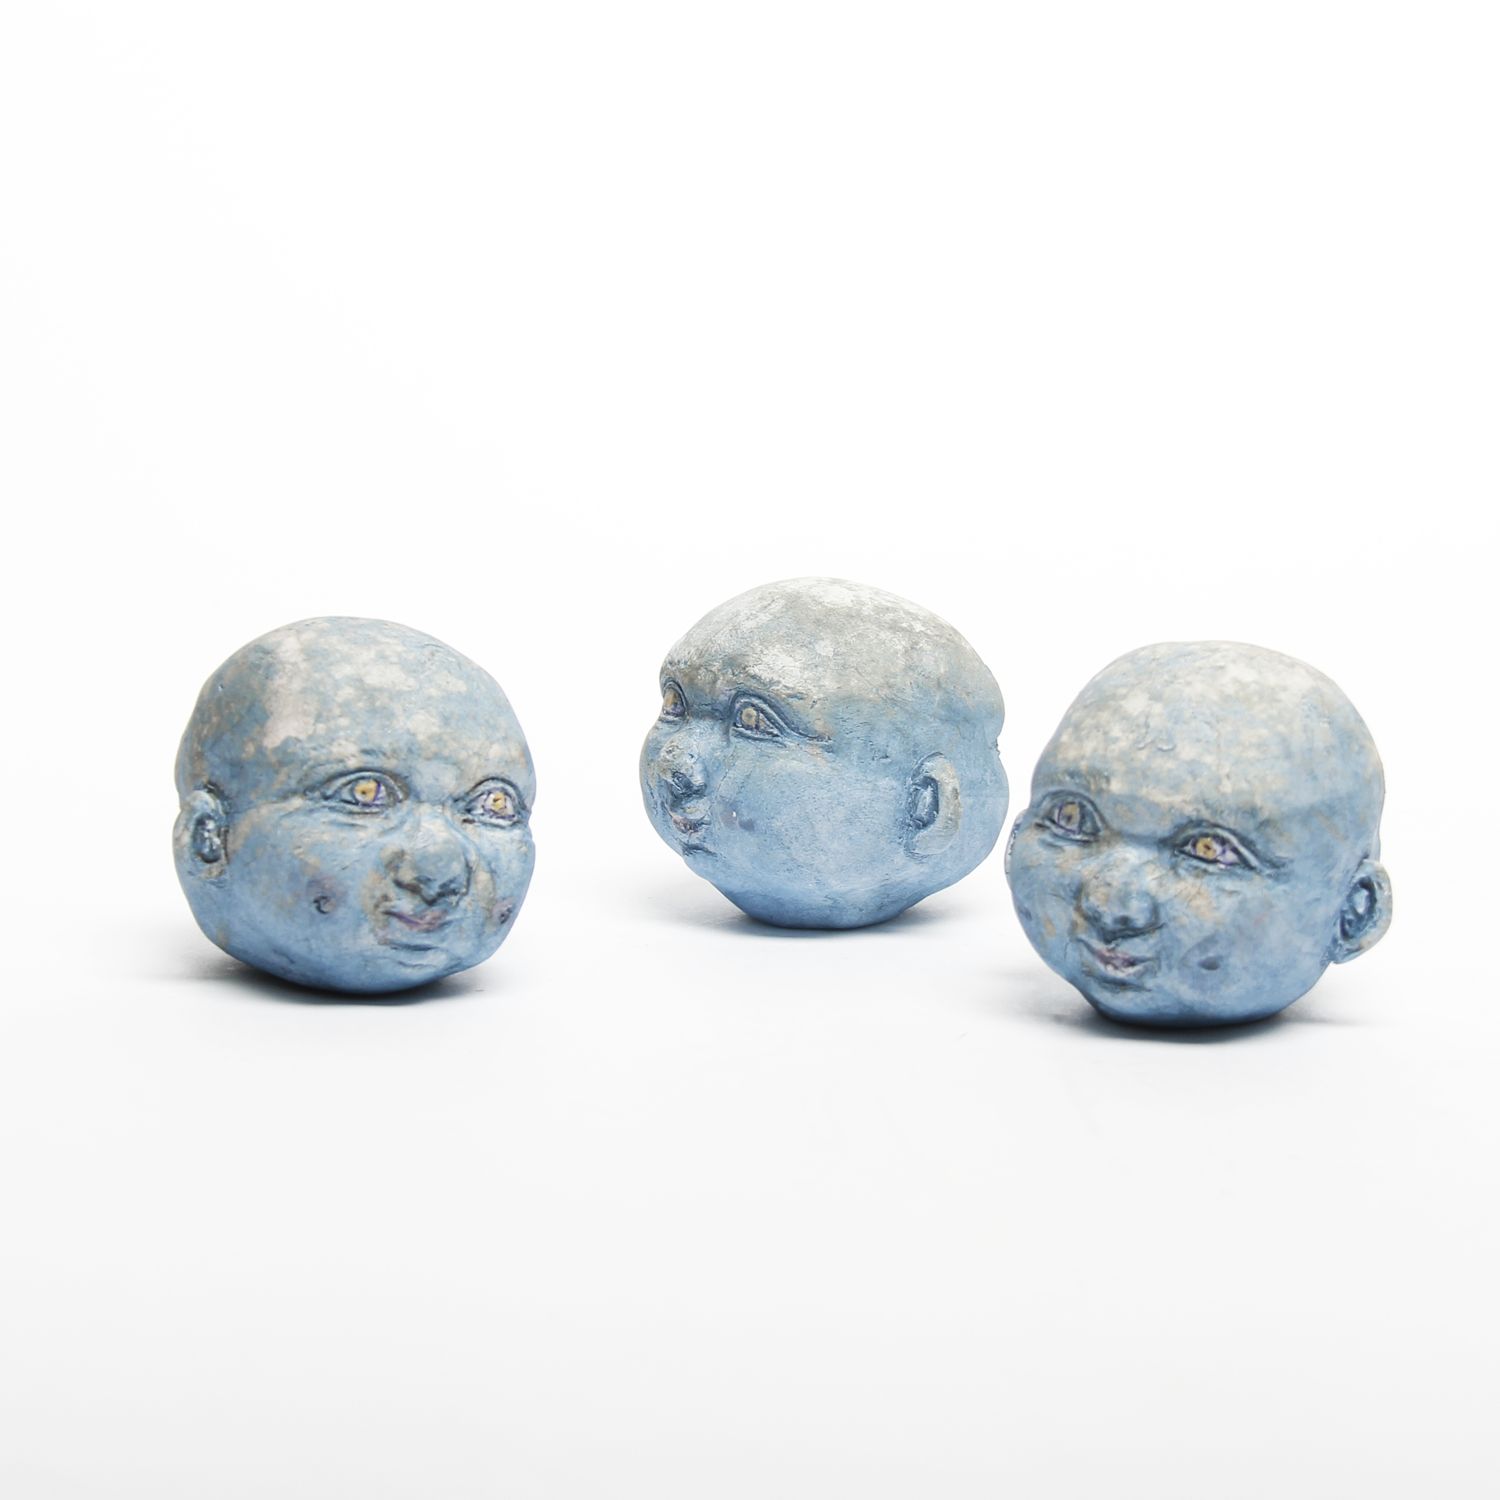 Debra Sloan: Blue Heads Product Image 1 of 1